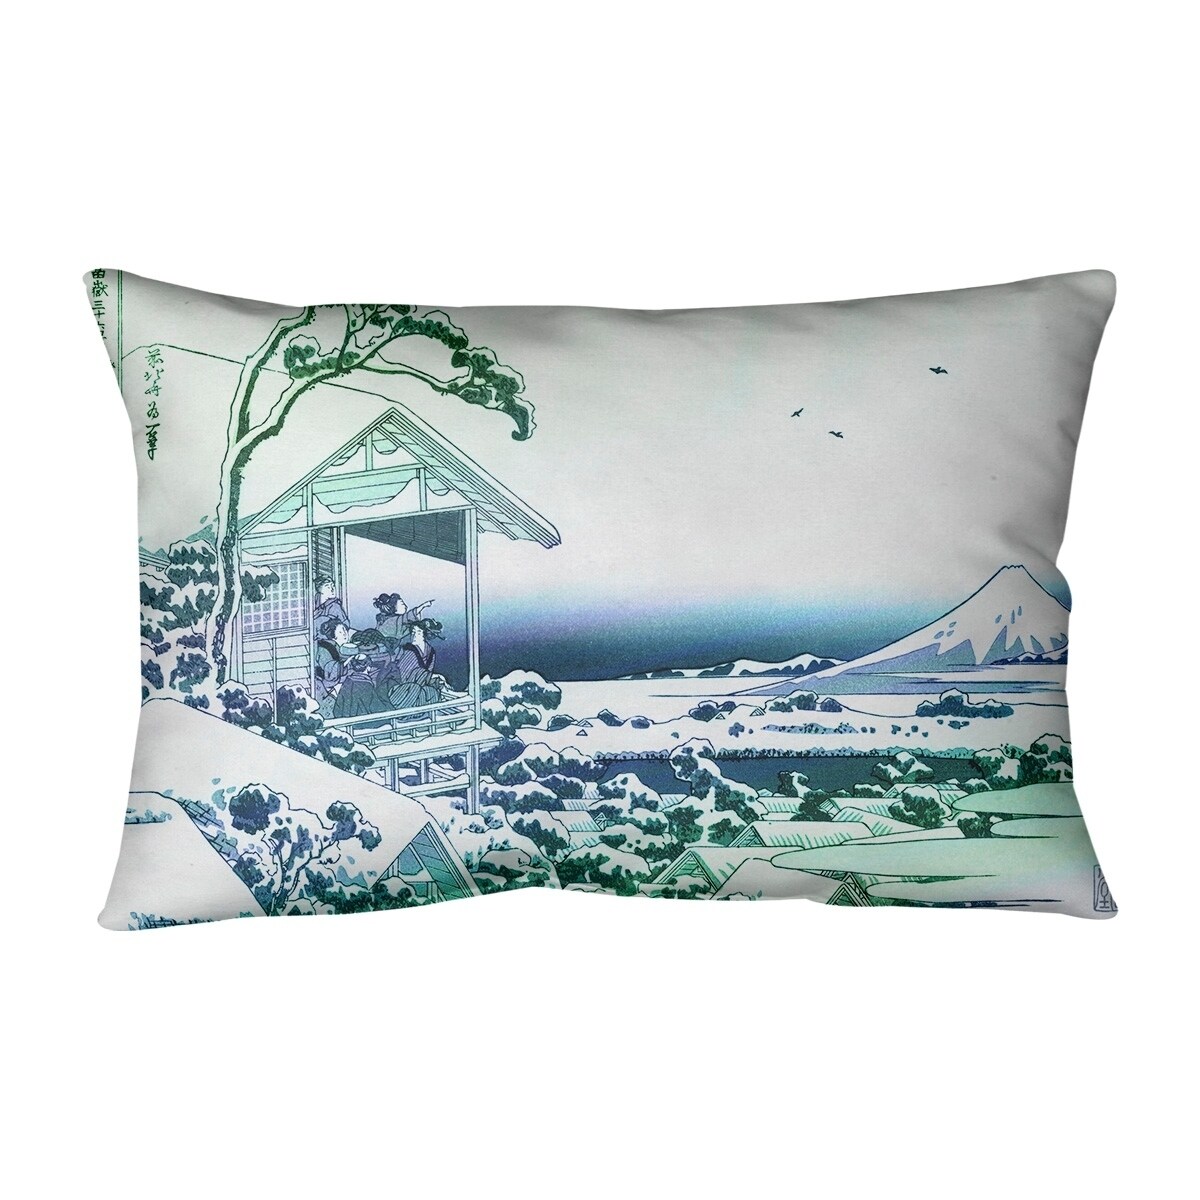 Vintage Images Katsushika Hokusai's Tea House at Koishikawa Throw Pillow 16x16 Multicolor 